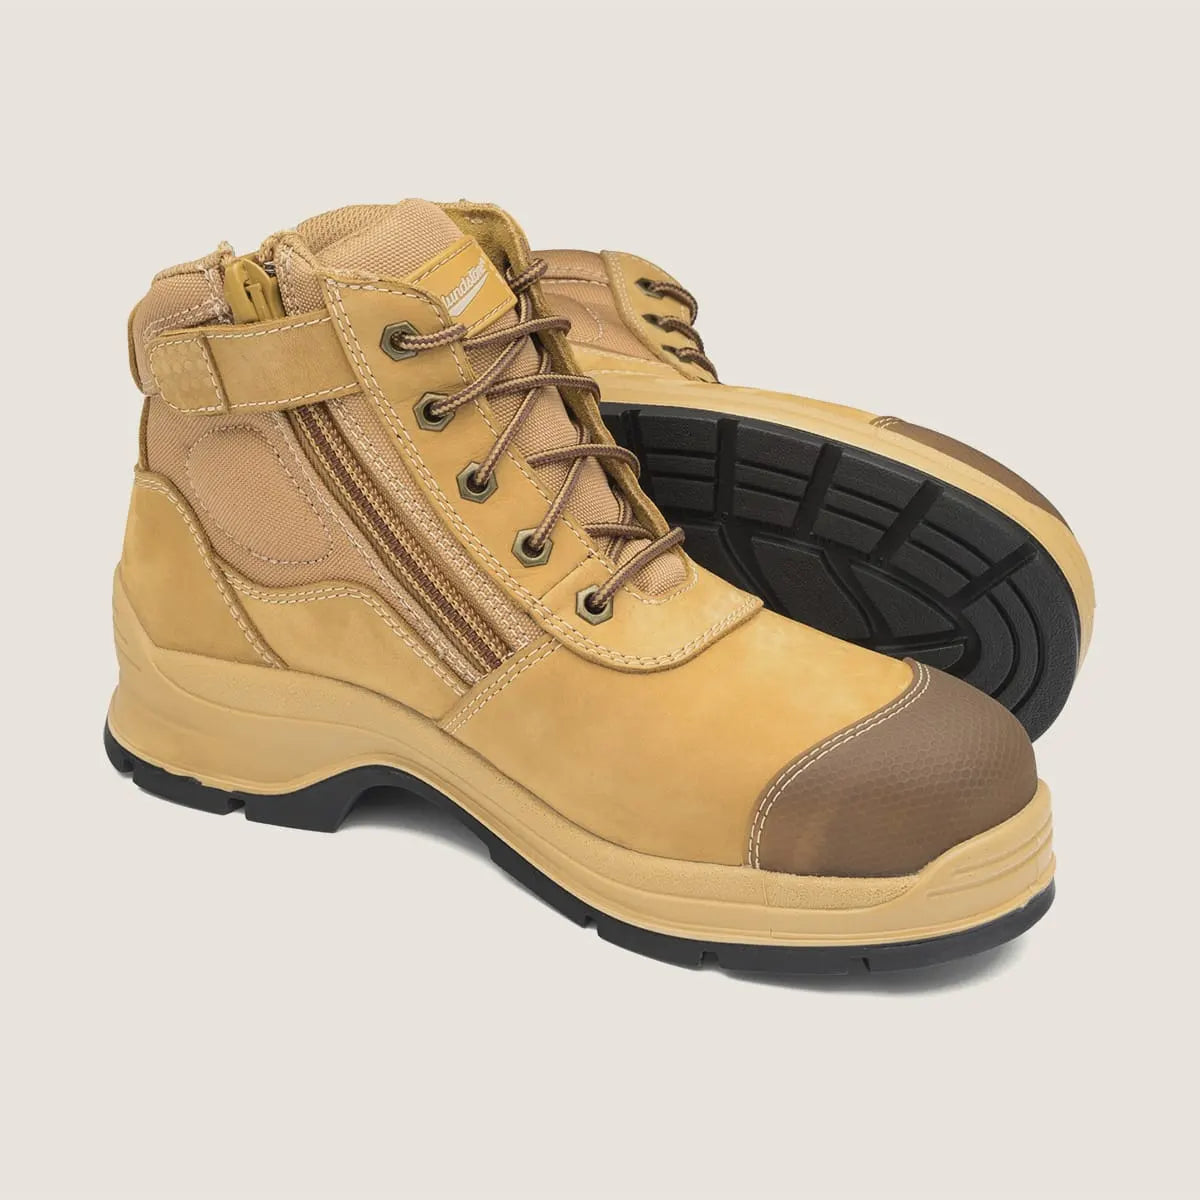 Blundstone 318 Unisex Zip Up Safety Boots-Wheat